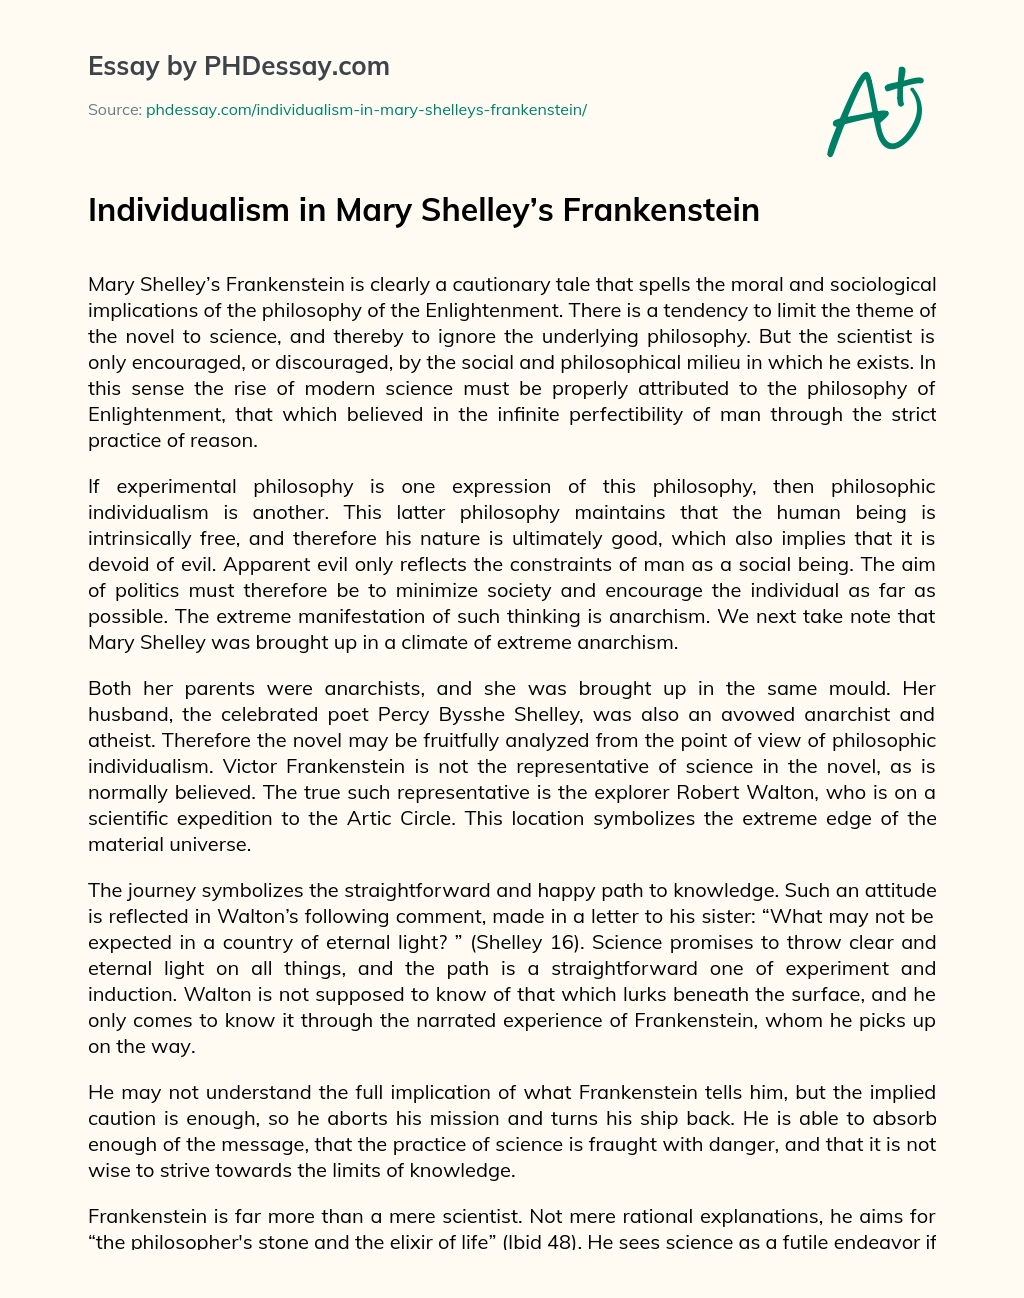 Individualism in Mary Shelley’s Frankenstein essay